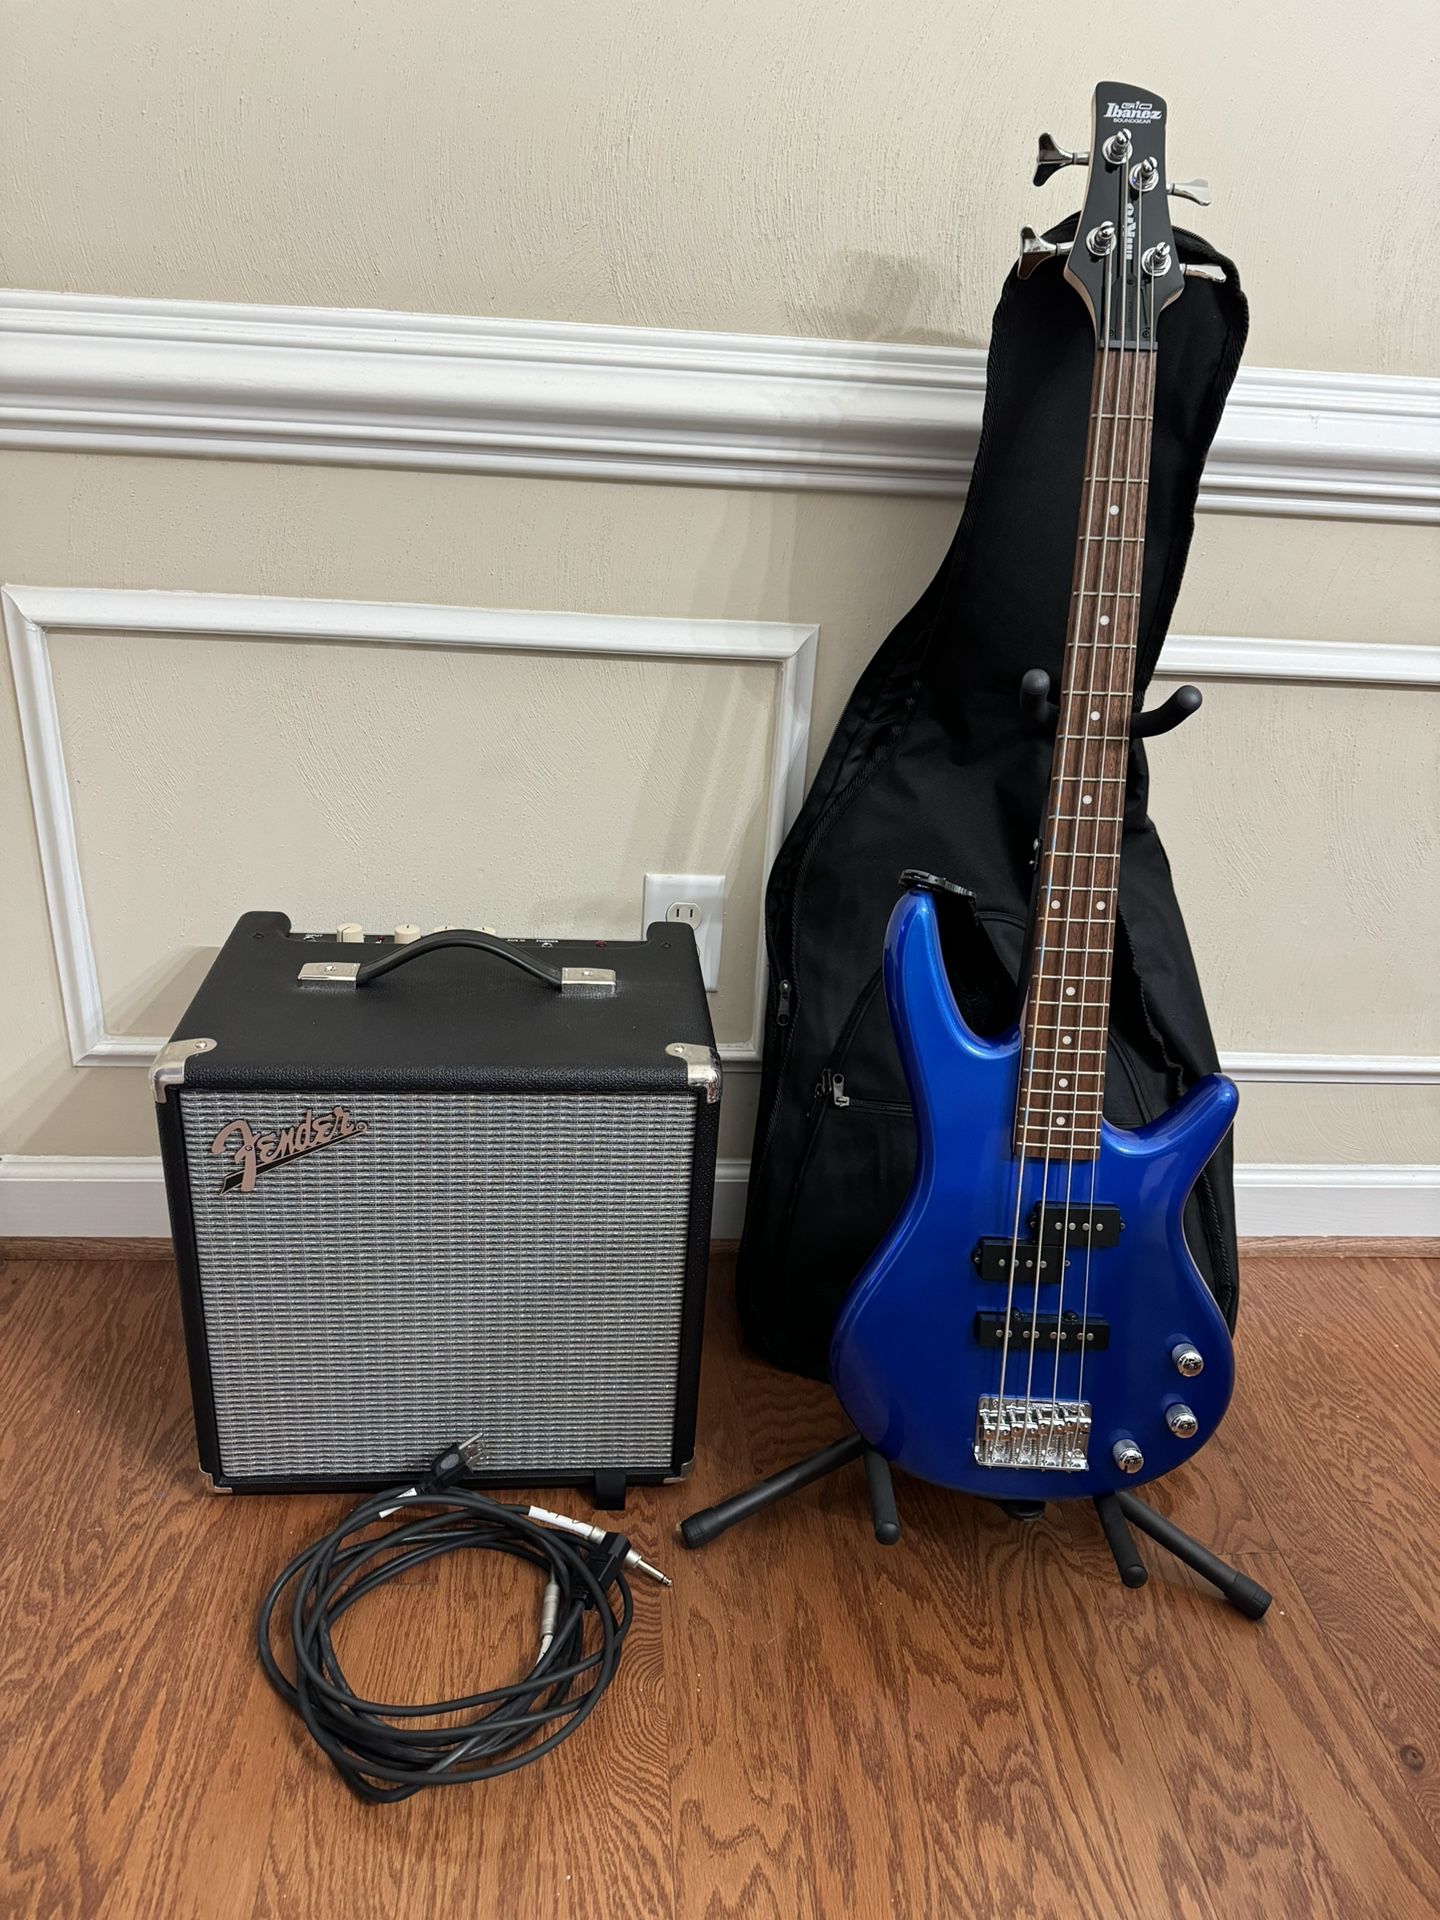  Ibanez Short-Scale Bass Guitar & Fender Rumble 25 Amplifier